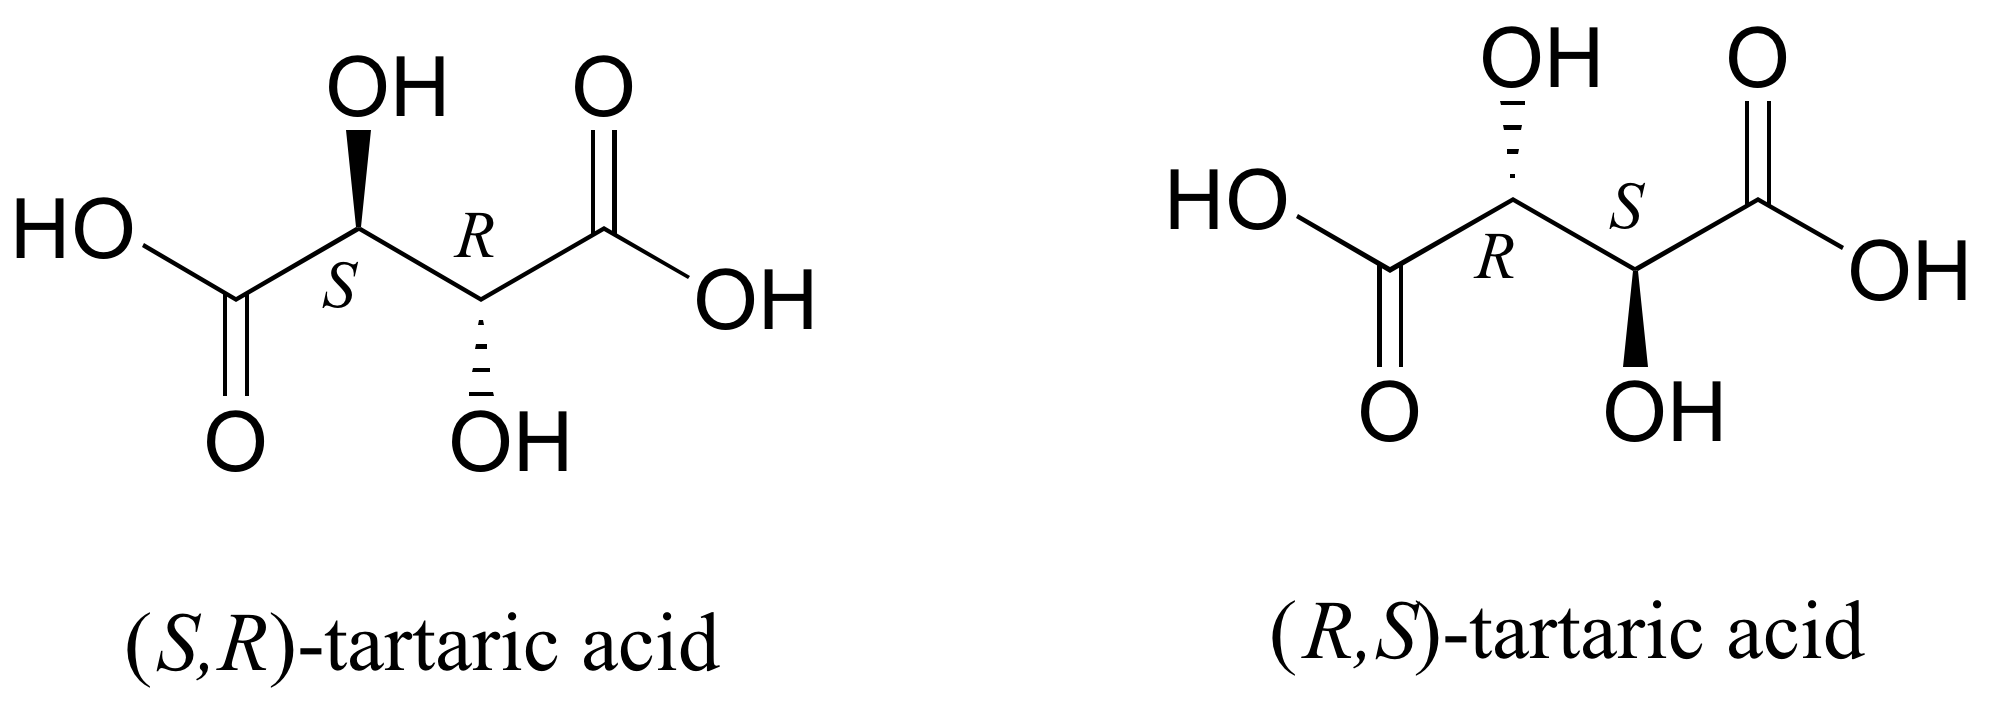 Izquierda: (S, R) - molécula de ácido tartárico. Derecha: (R, S) - molécula de ácido tartárico.